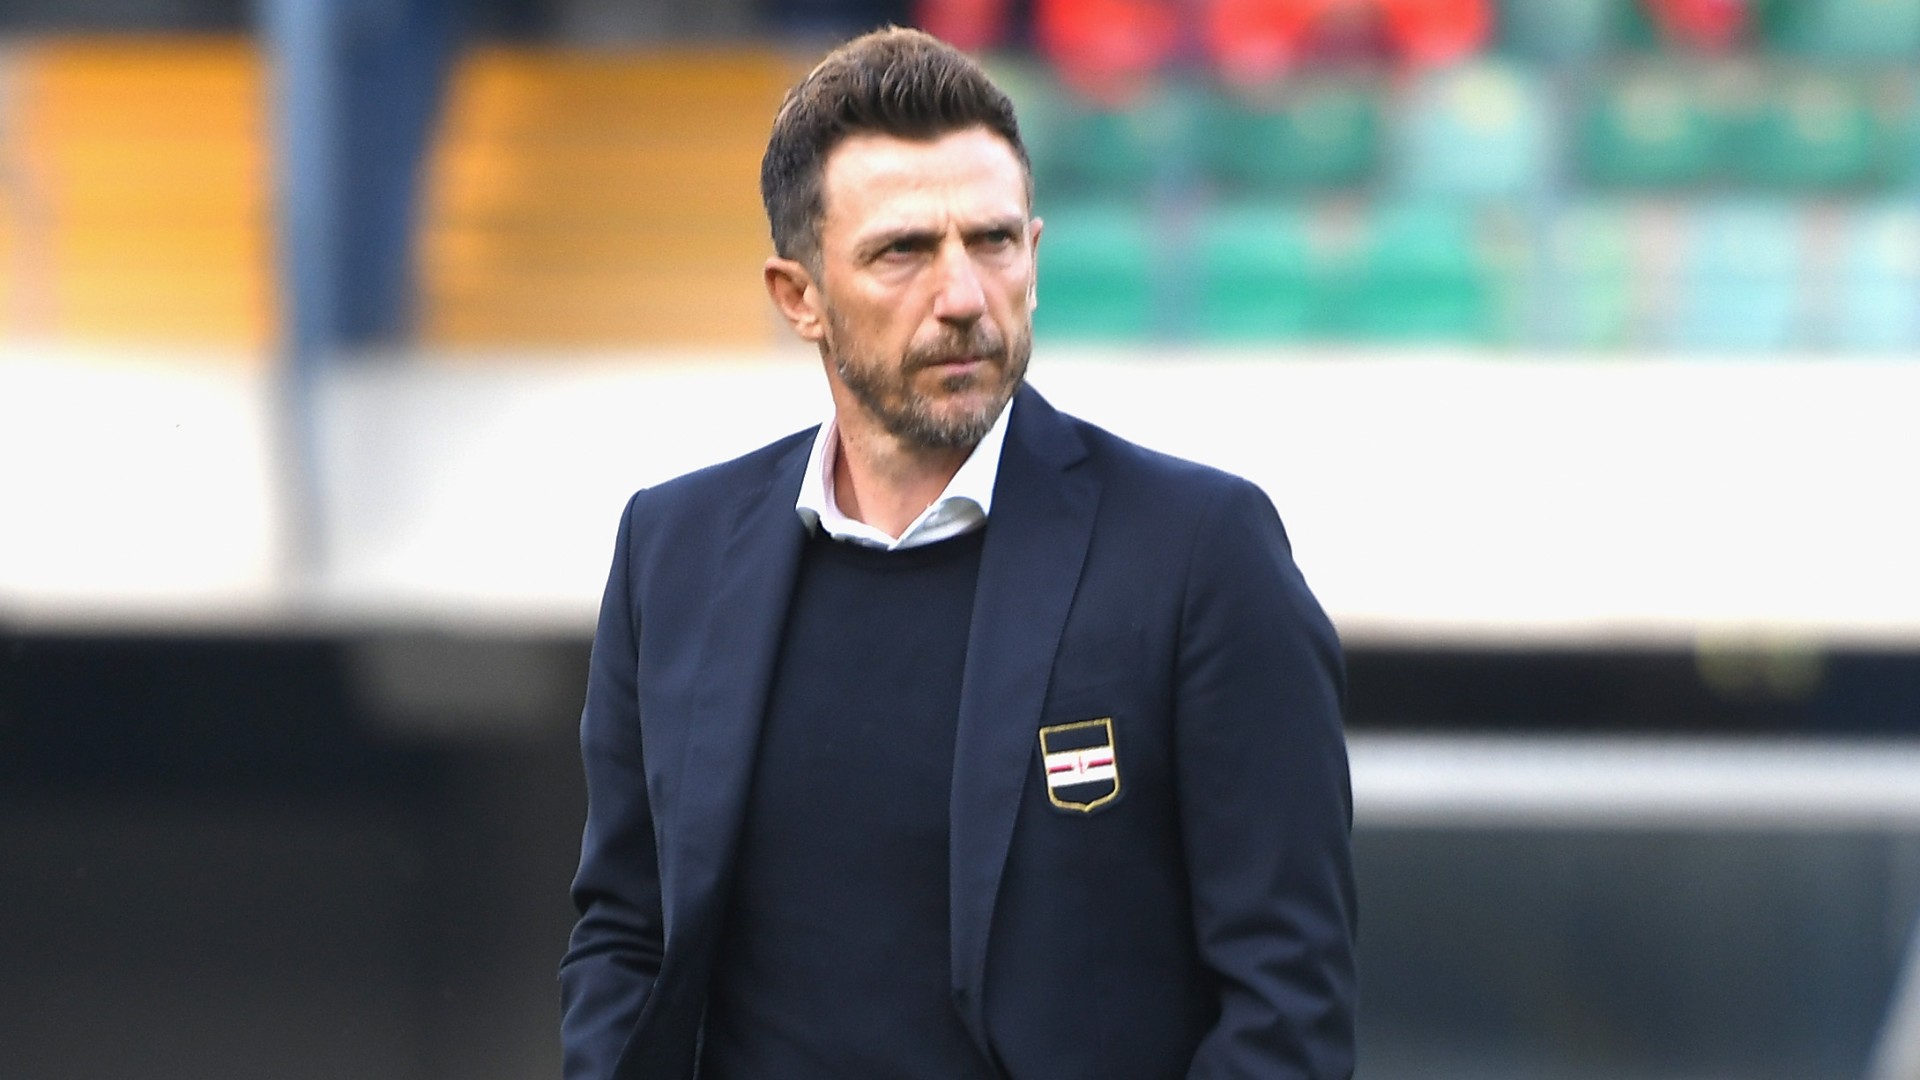 Cagliari hire Di Francesco to replace Zenga